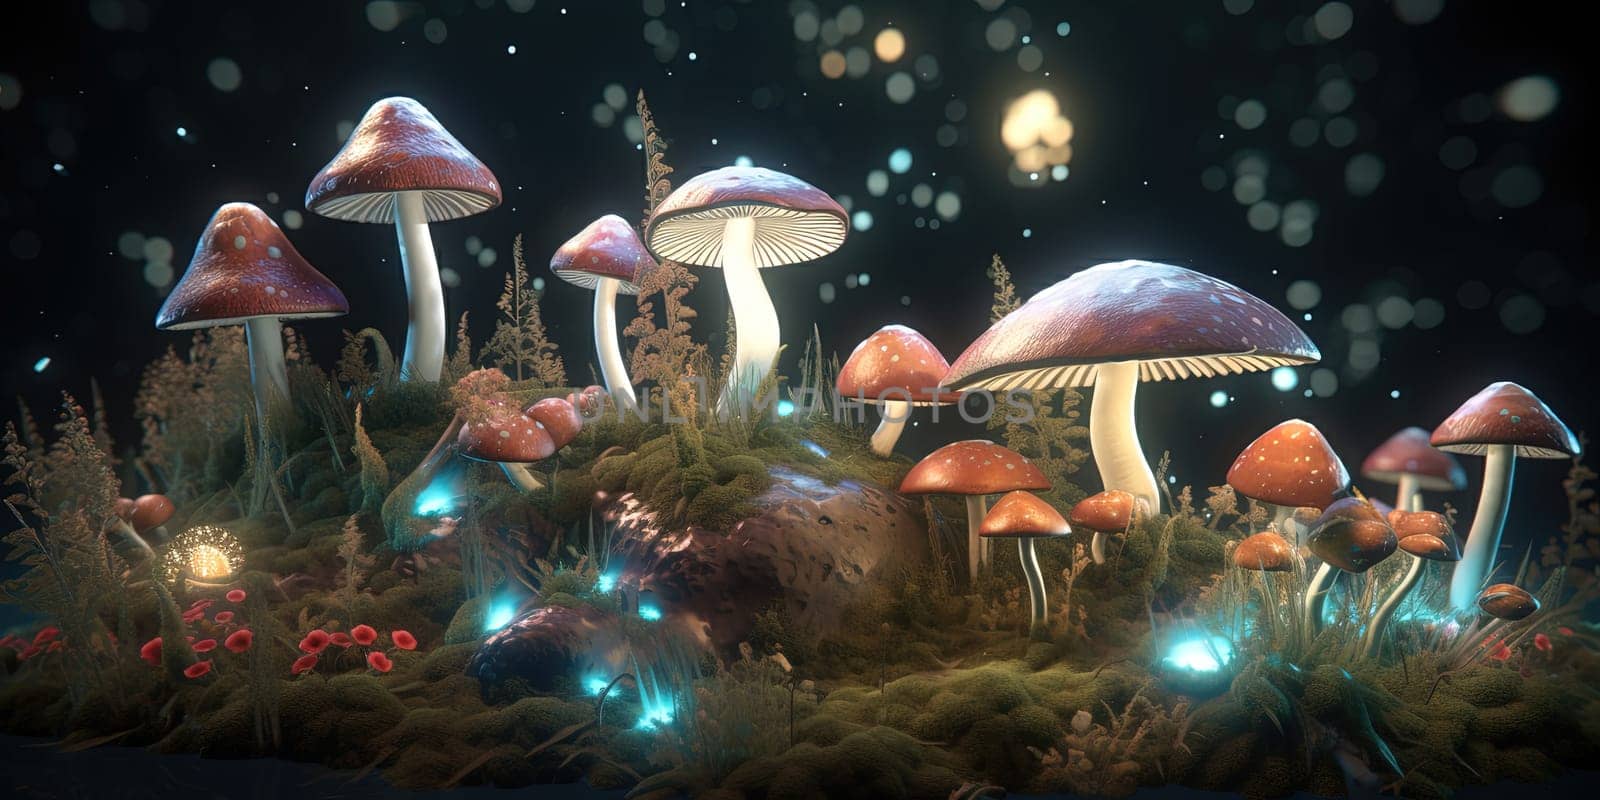 Magical Illustration Of Illuminated Mushrooms In Fairly World